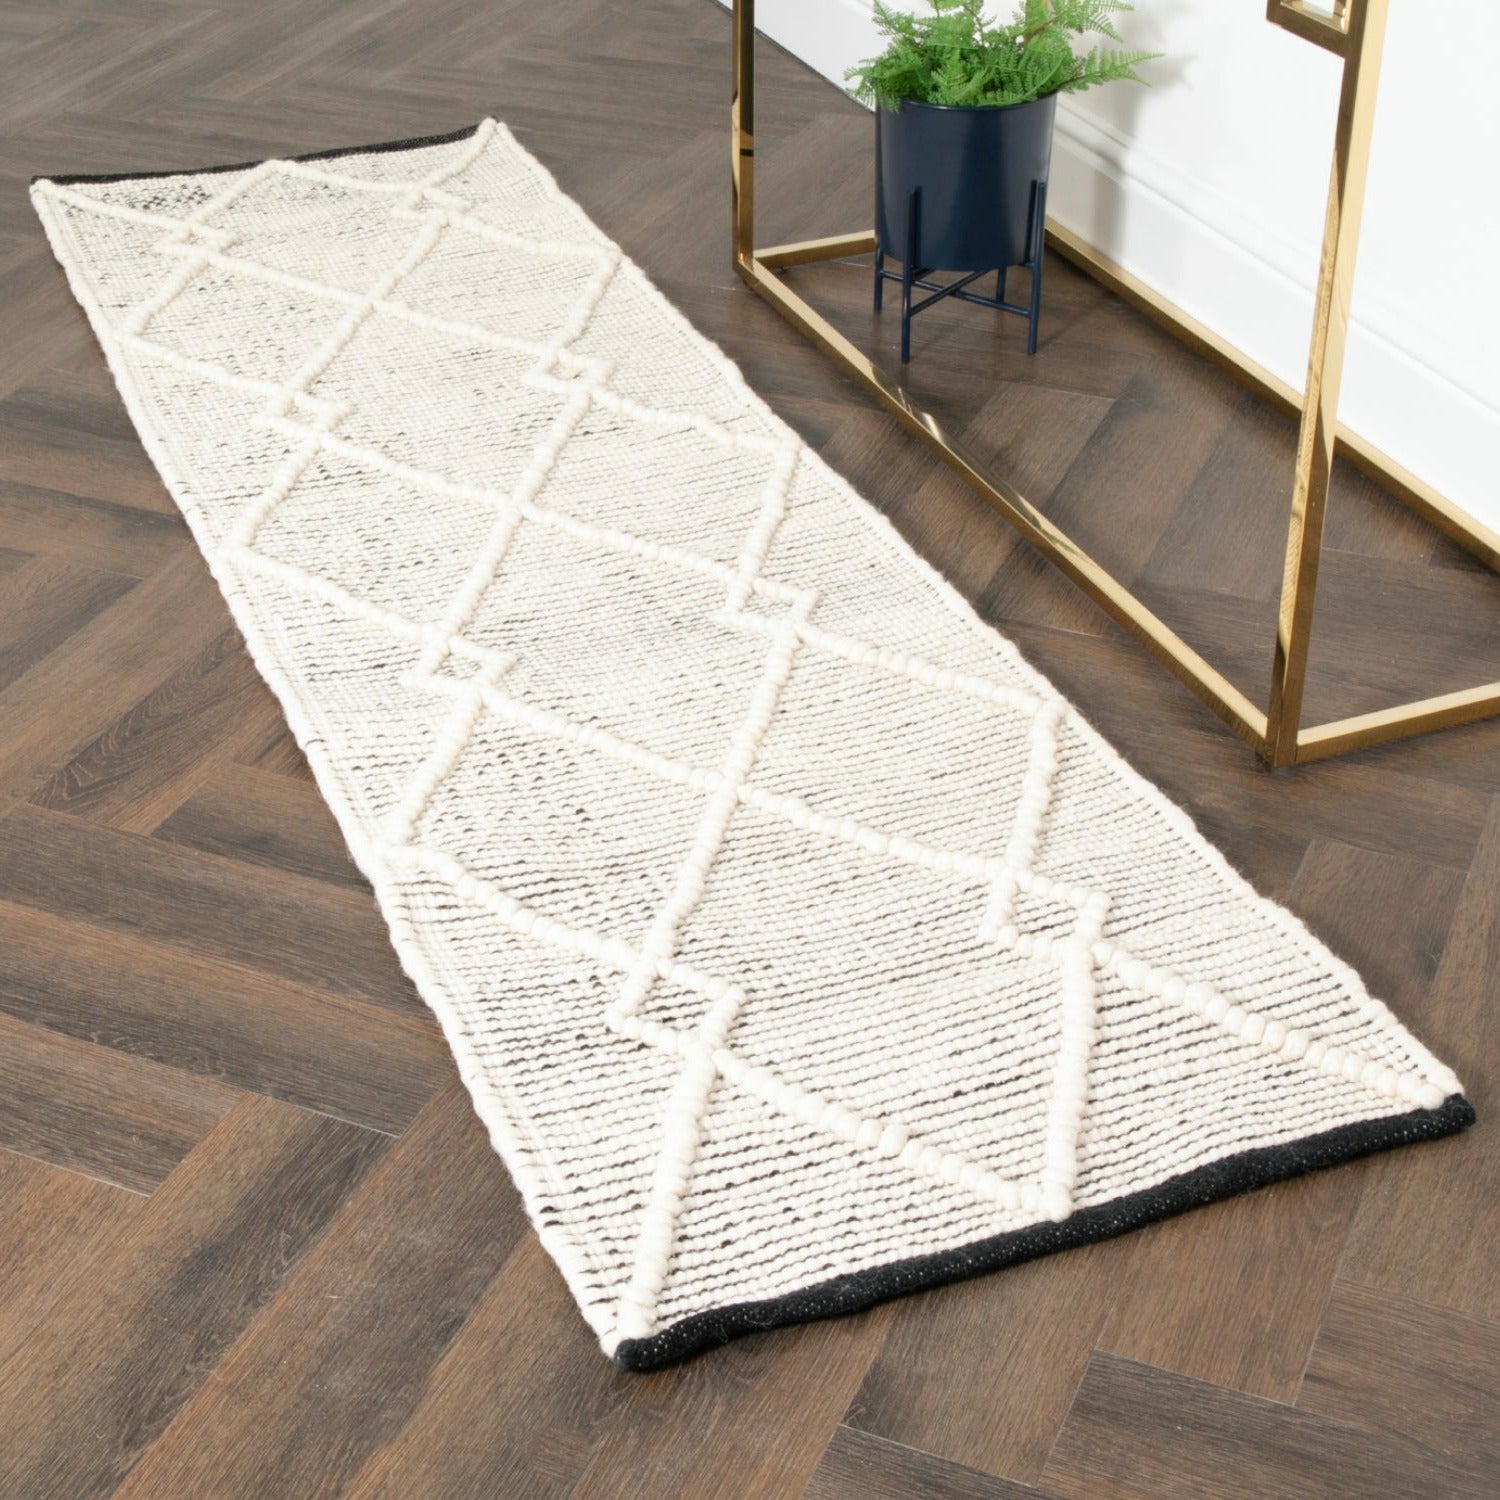 Cream & black diamond pattern wool rug by Native